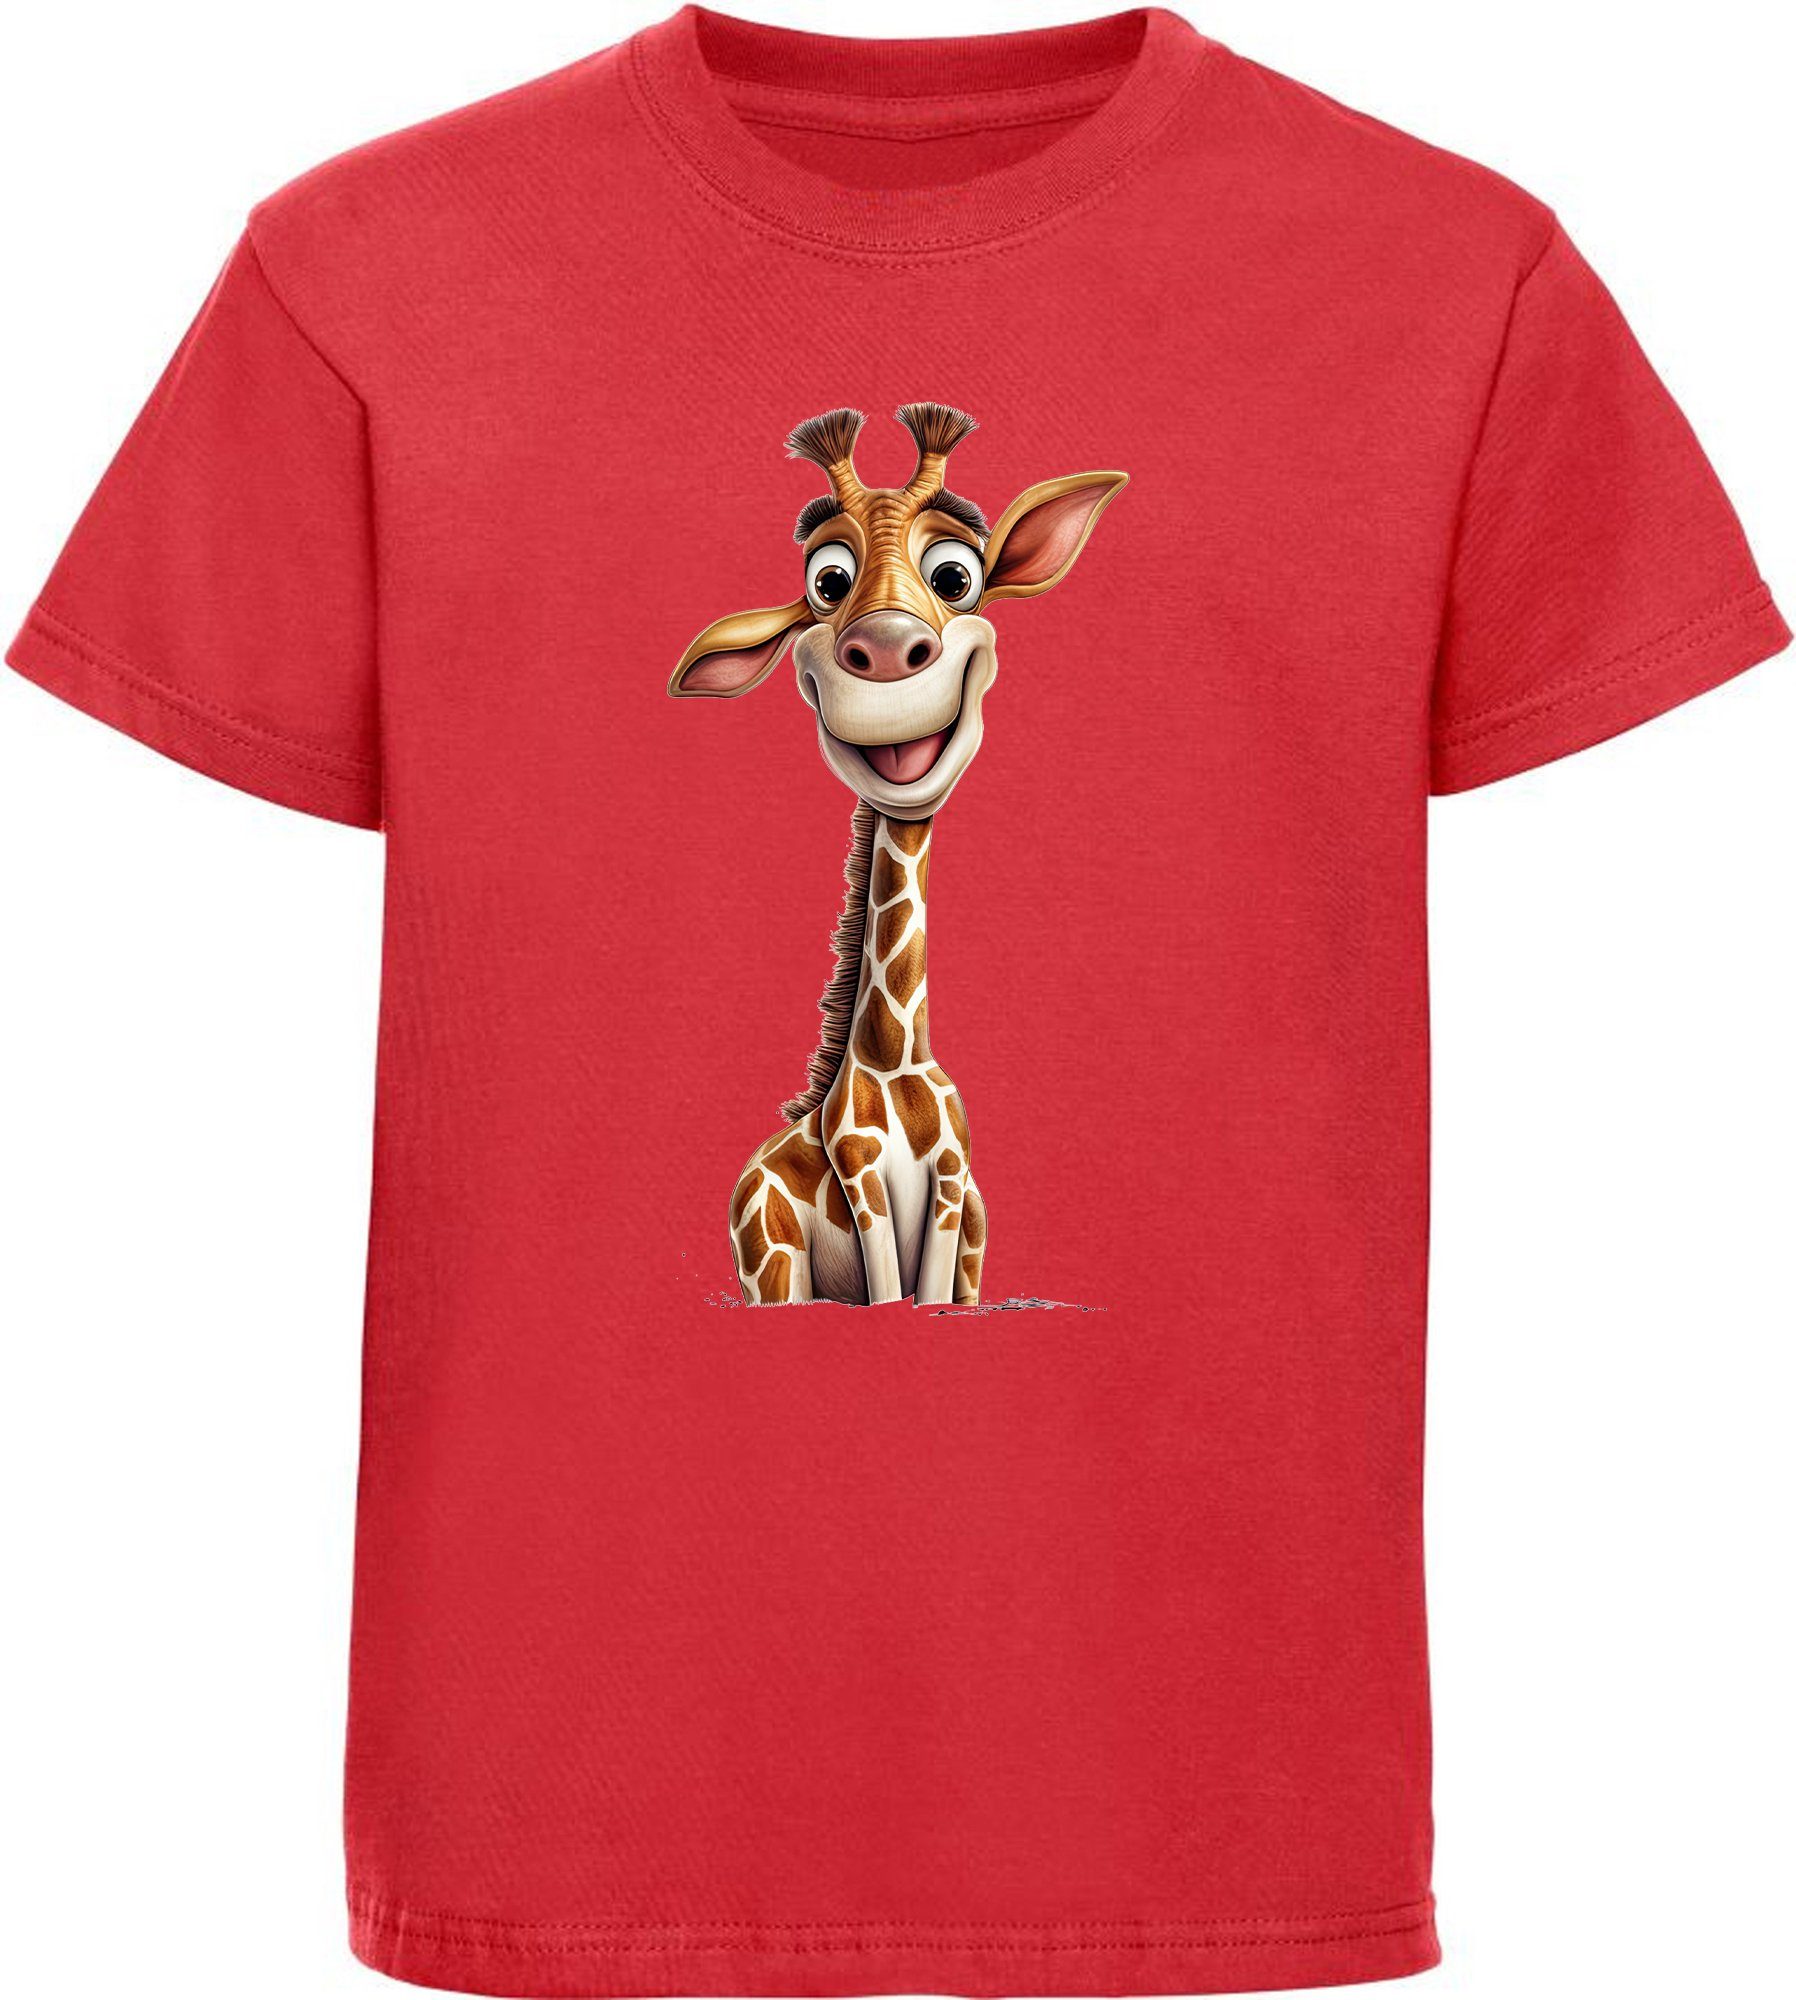 Baumwollshirt Aufdruck, Shirt Kinder T-Shirt Baby Giraffe rot mit Print MyDesign24 bedruckt - i273 Wildtier